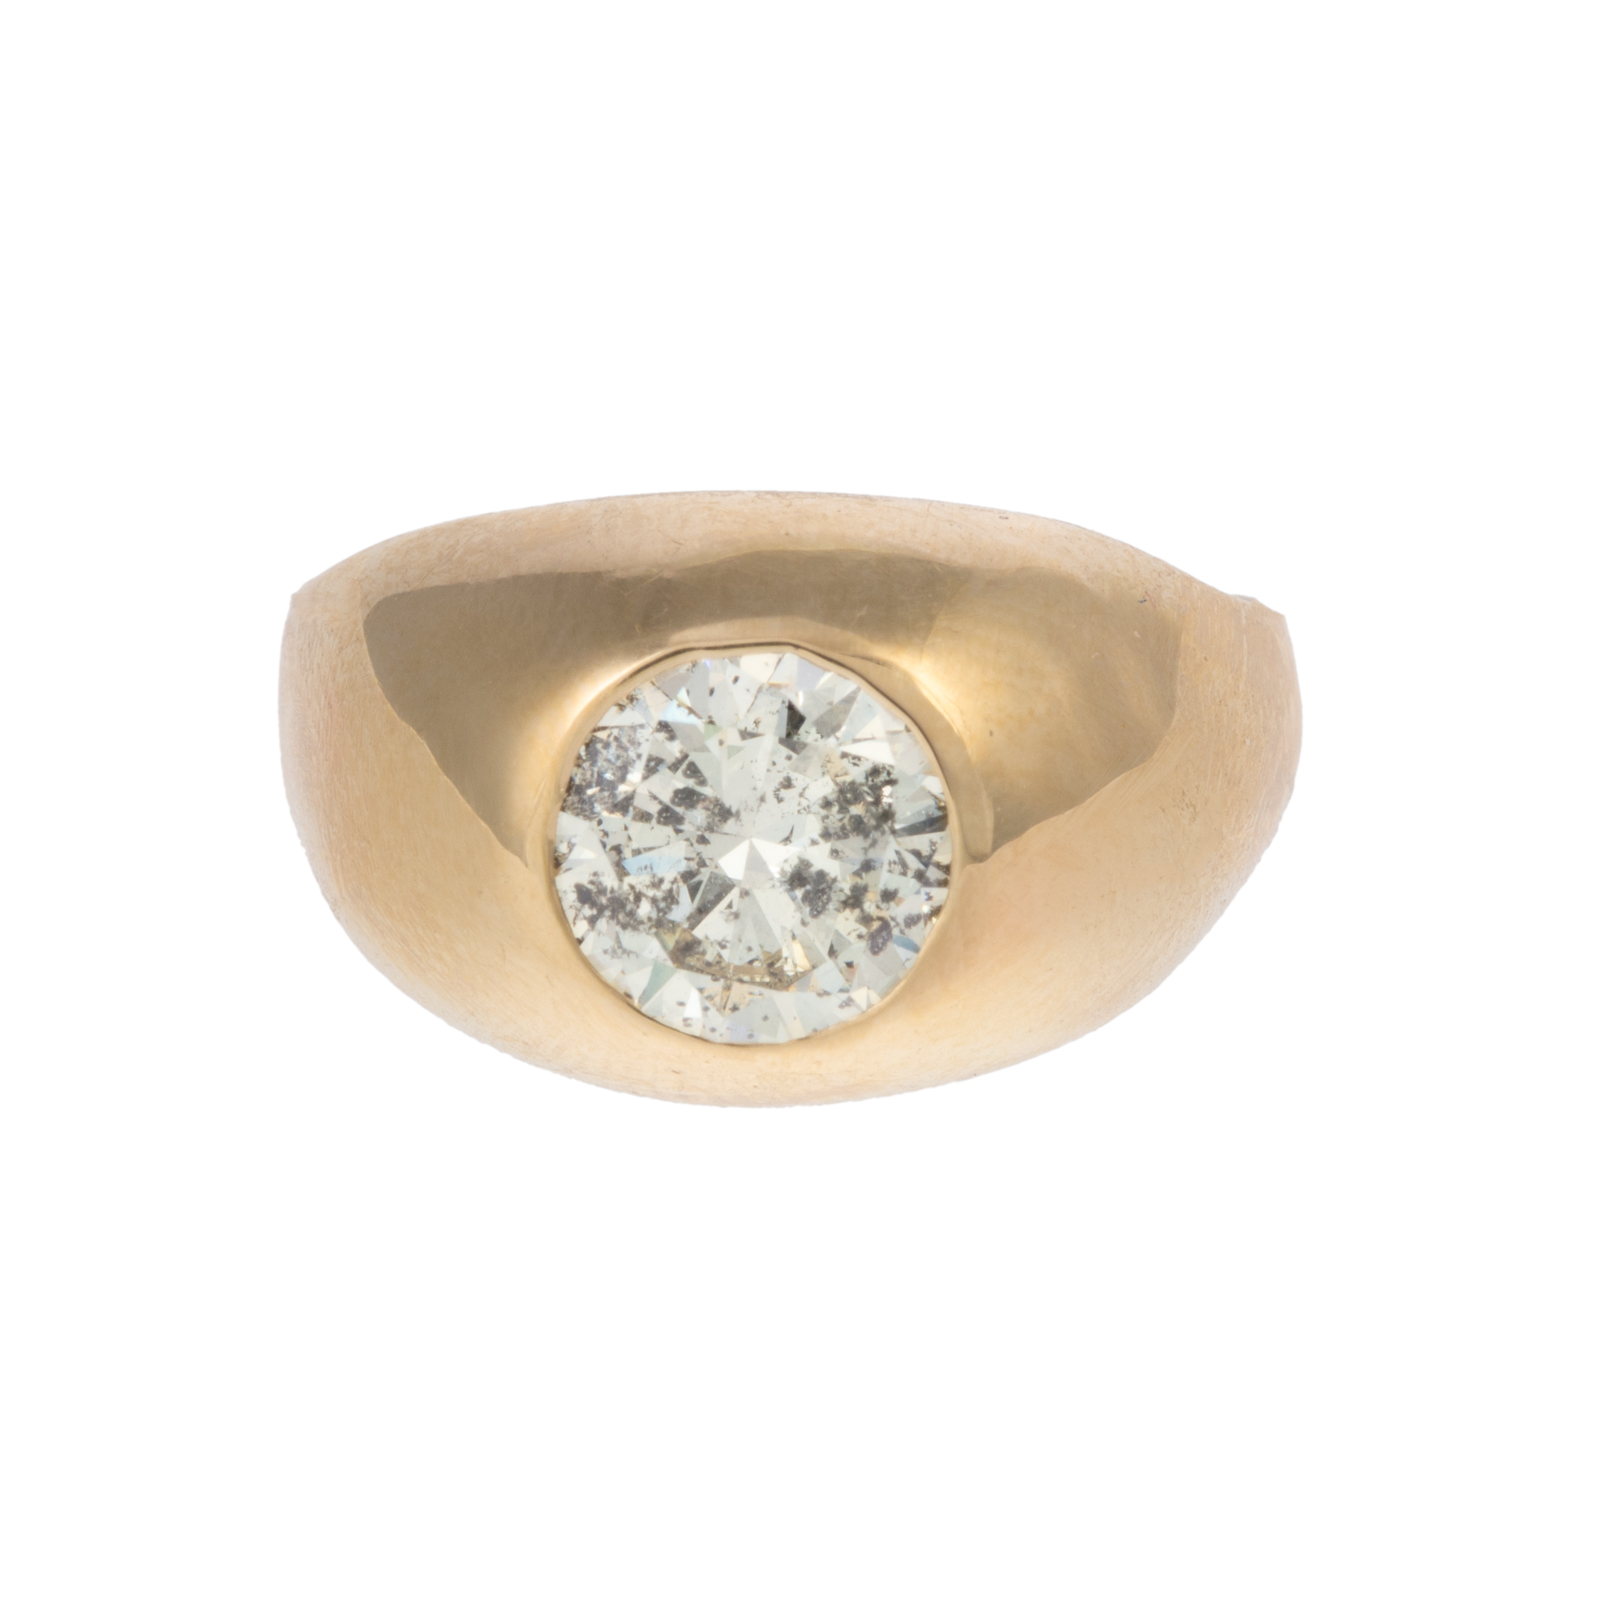 A 1 50 CT GYPSY SET DIAMOND RING 338d94